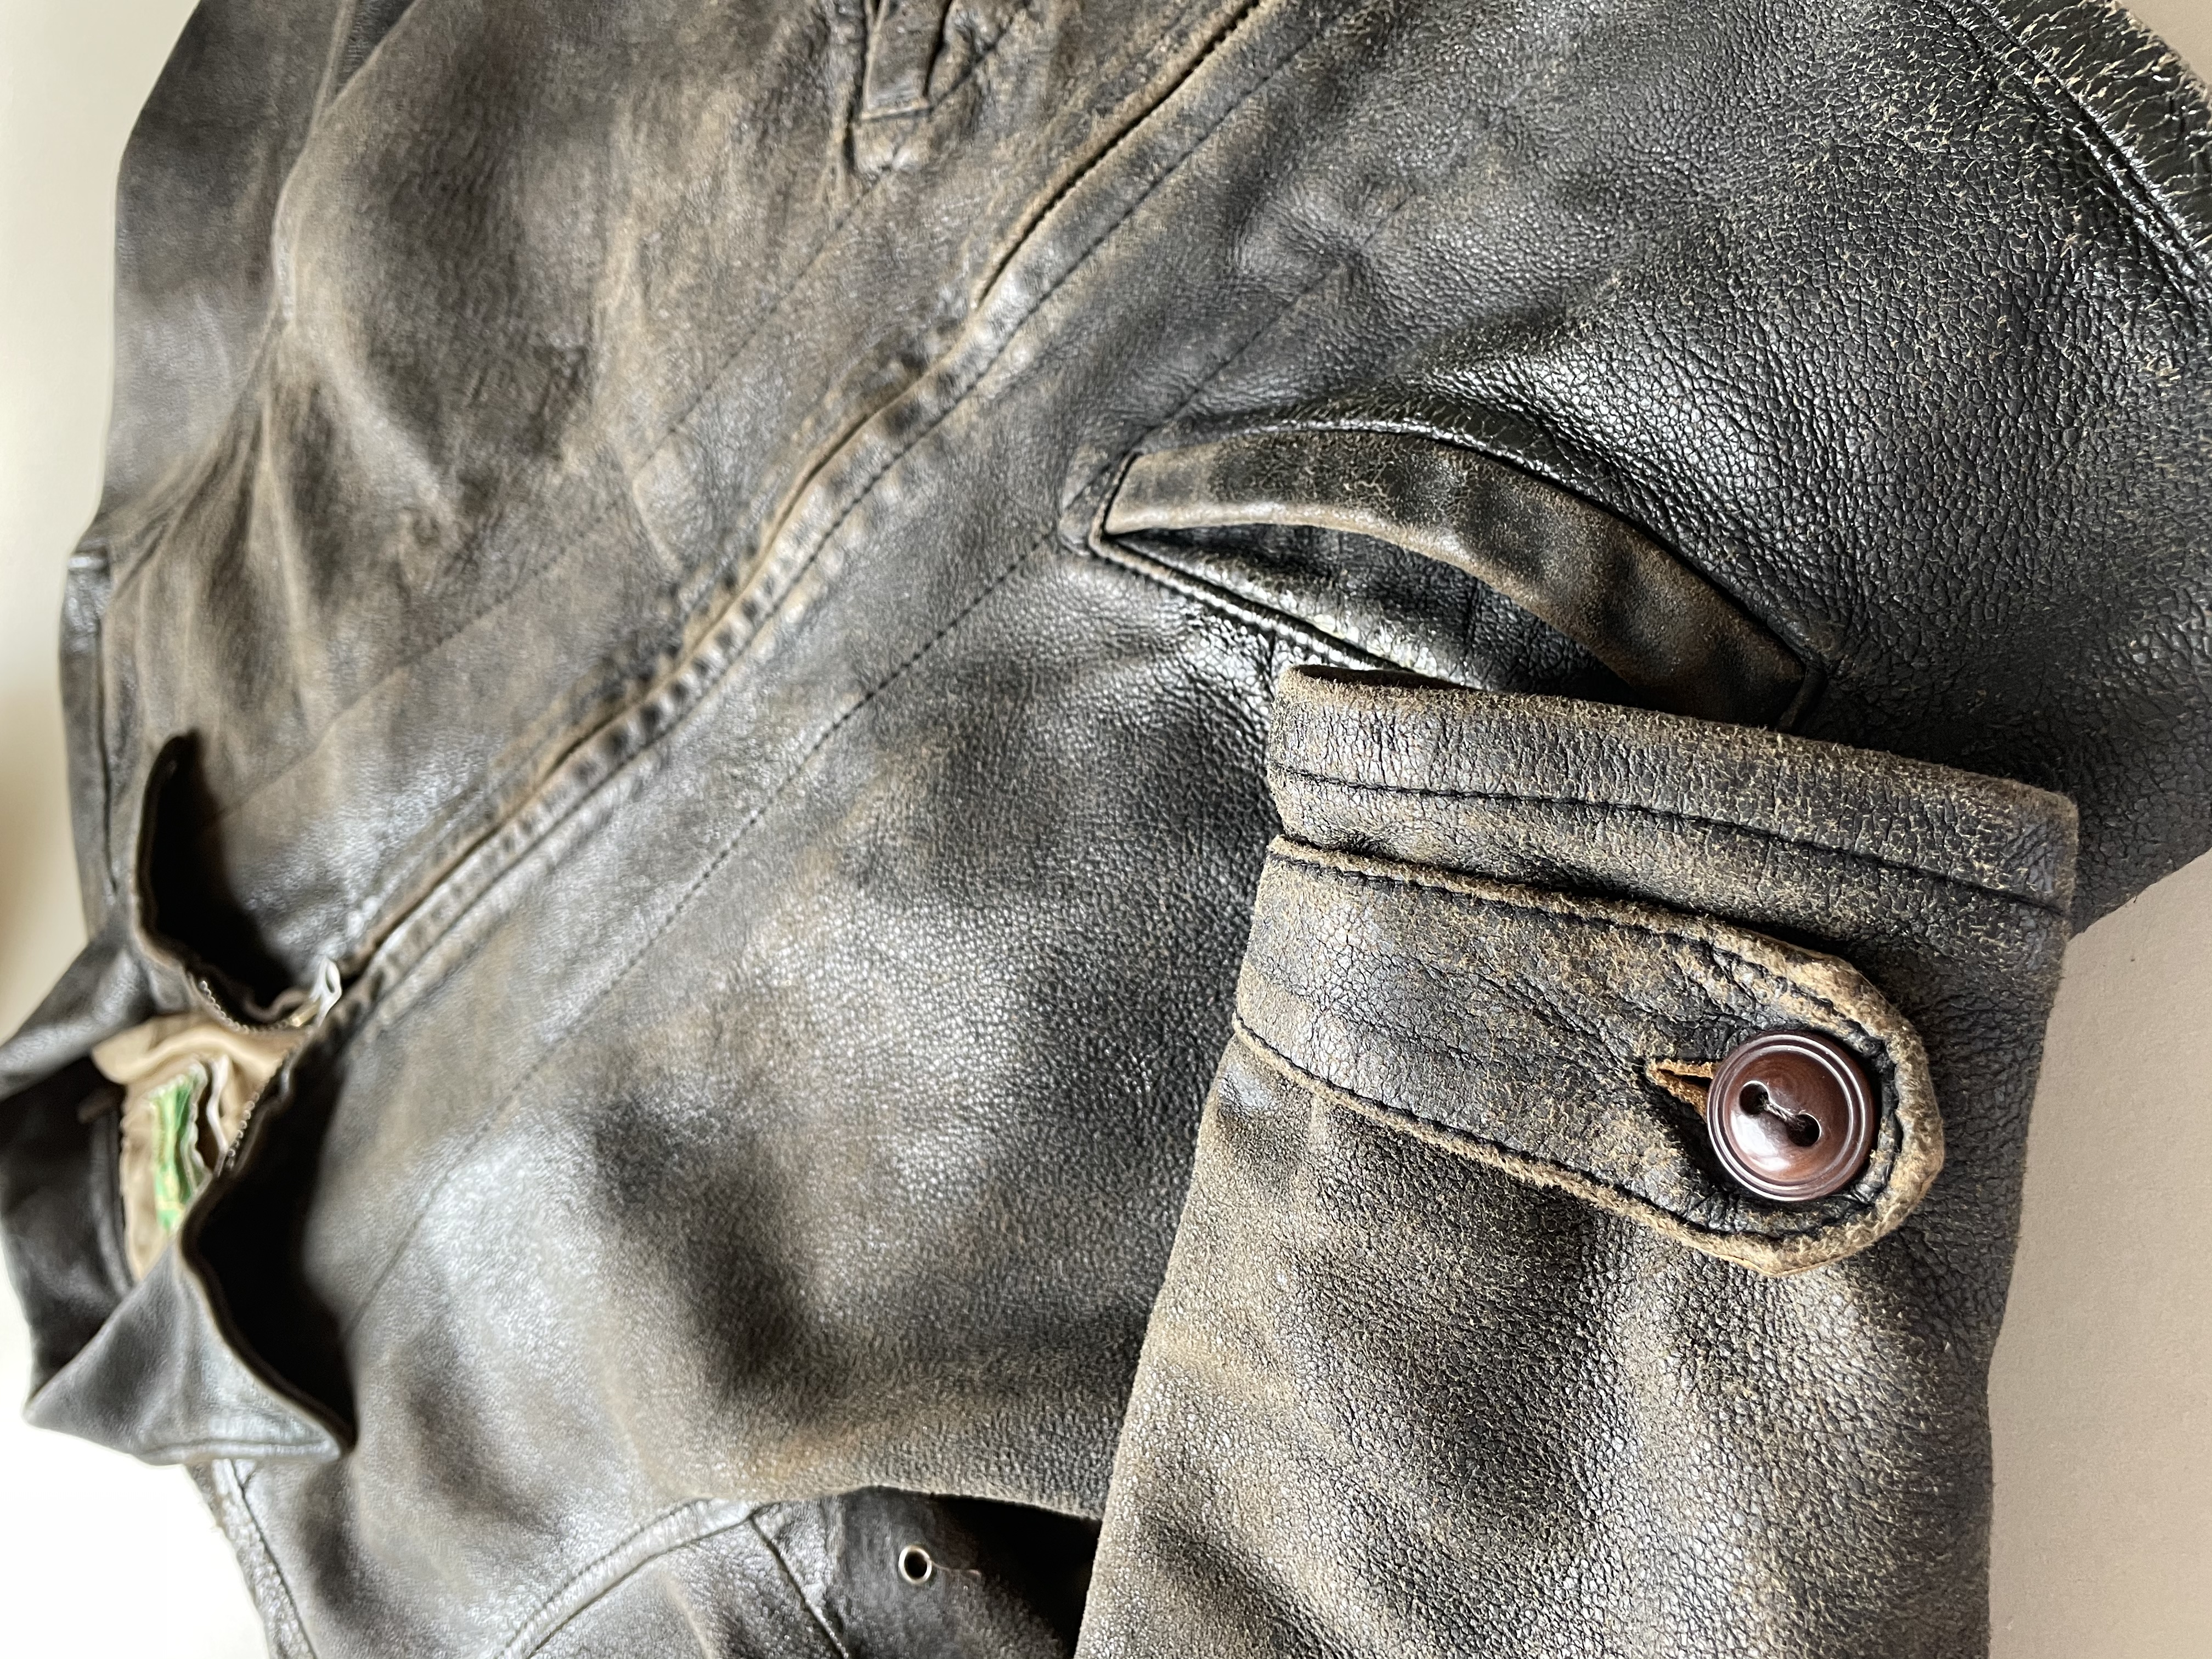 Levi's Vintage Leather Jacket in Skyfall